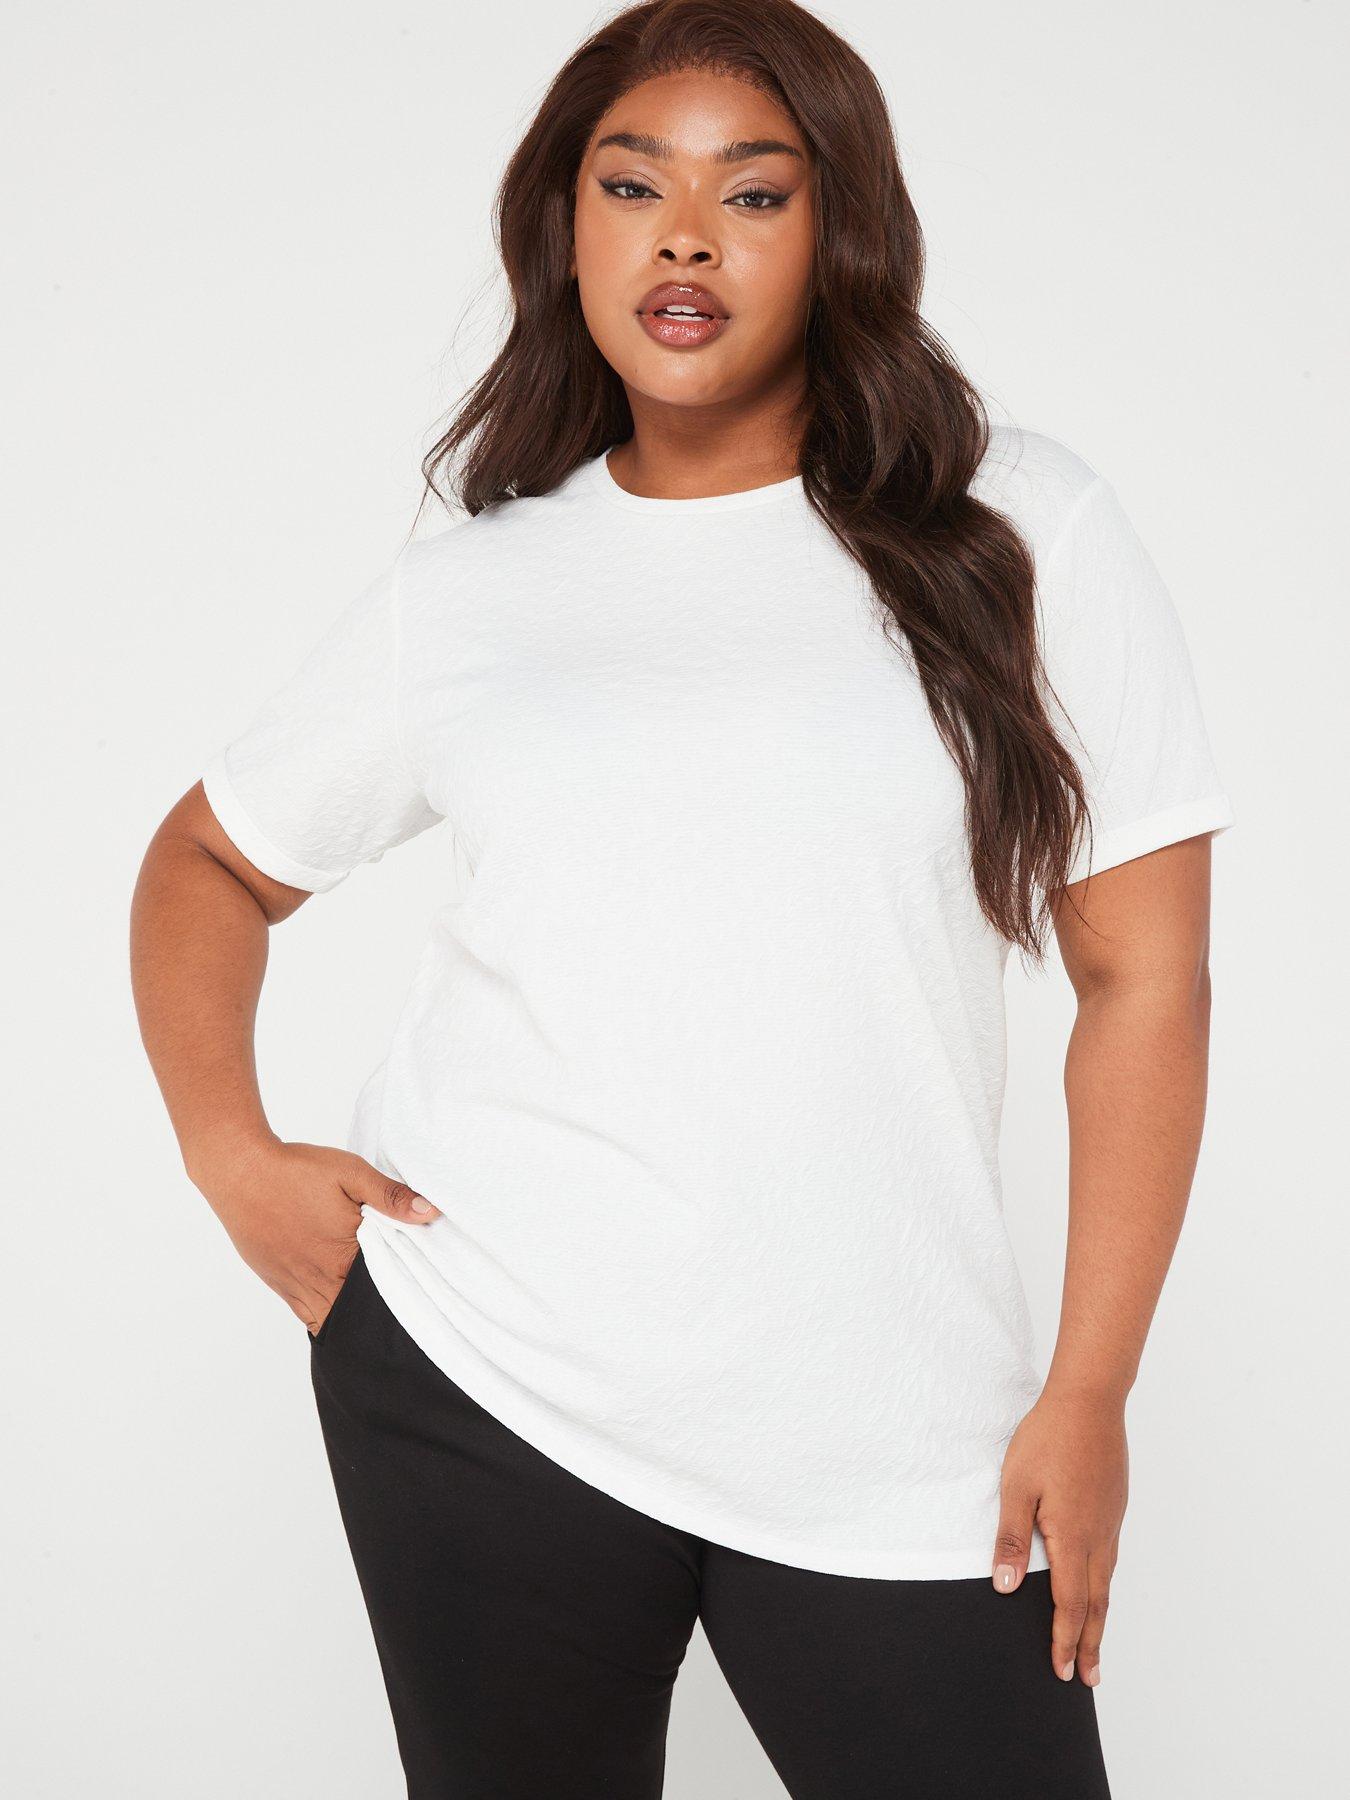 TWIFER T-Shirts For Women Plus Size Big Chest T-Shirt Shirt Short